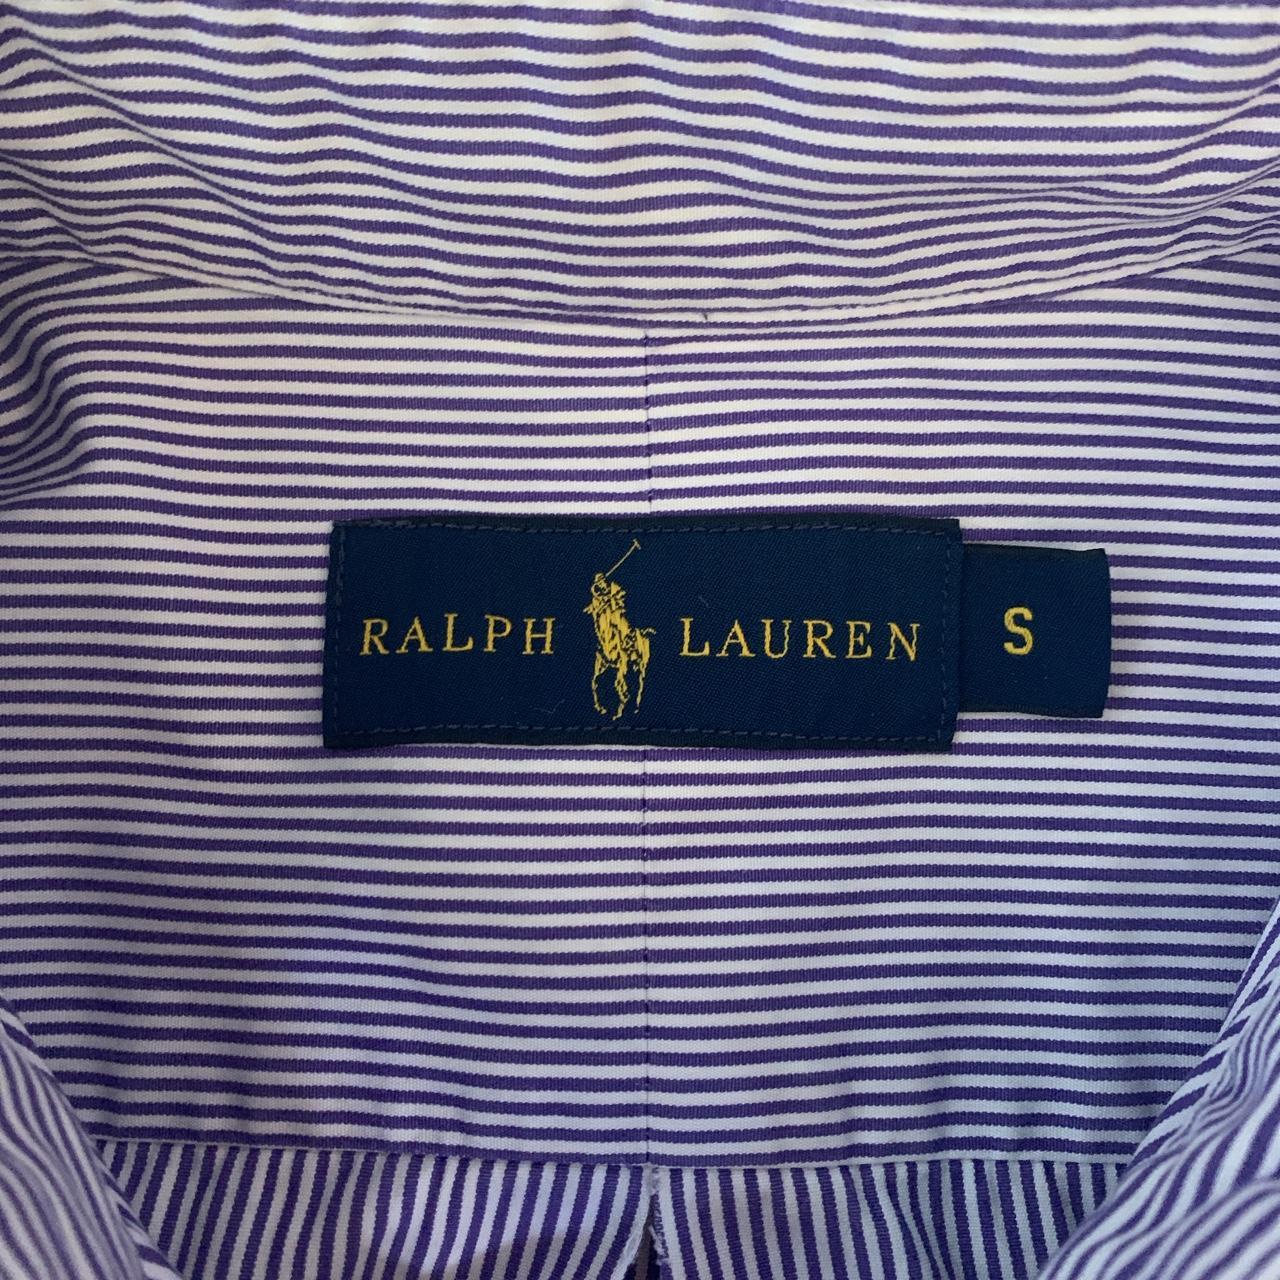 Ralph Lauren Men's Purple and White Shirt | Depop